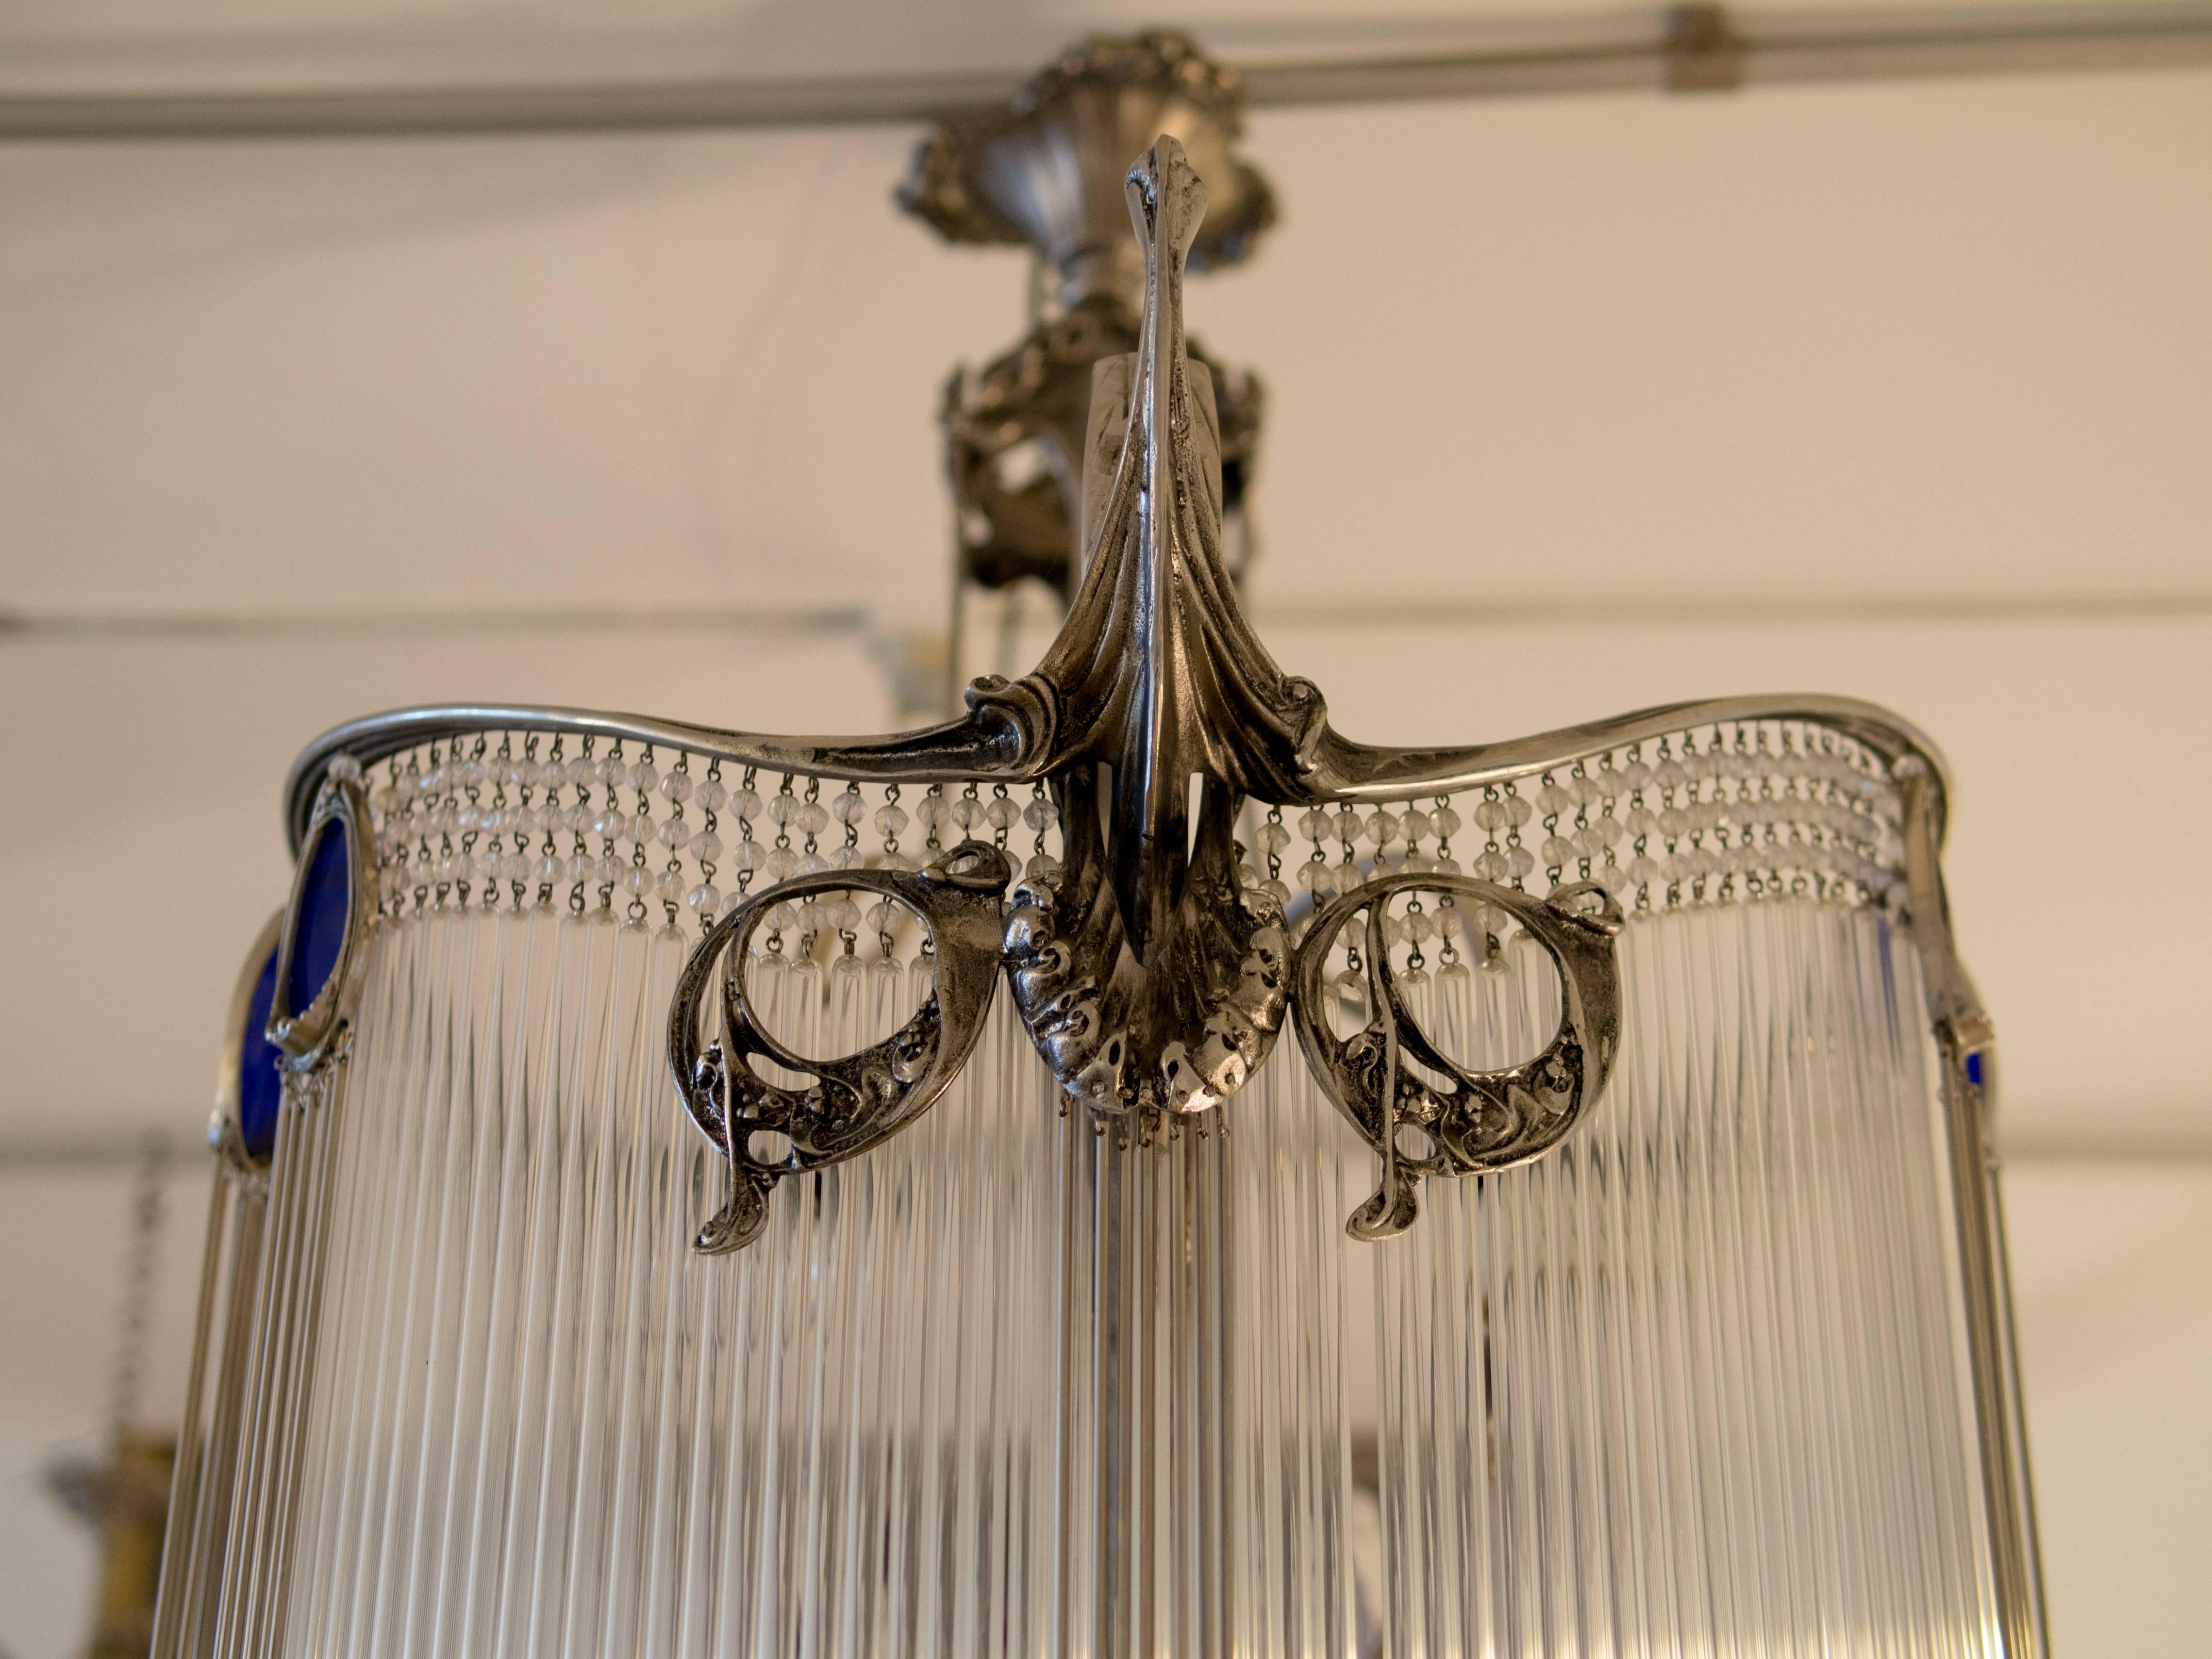 Big size Guimard's chandelier with nickel finish.